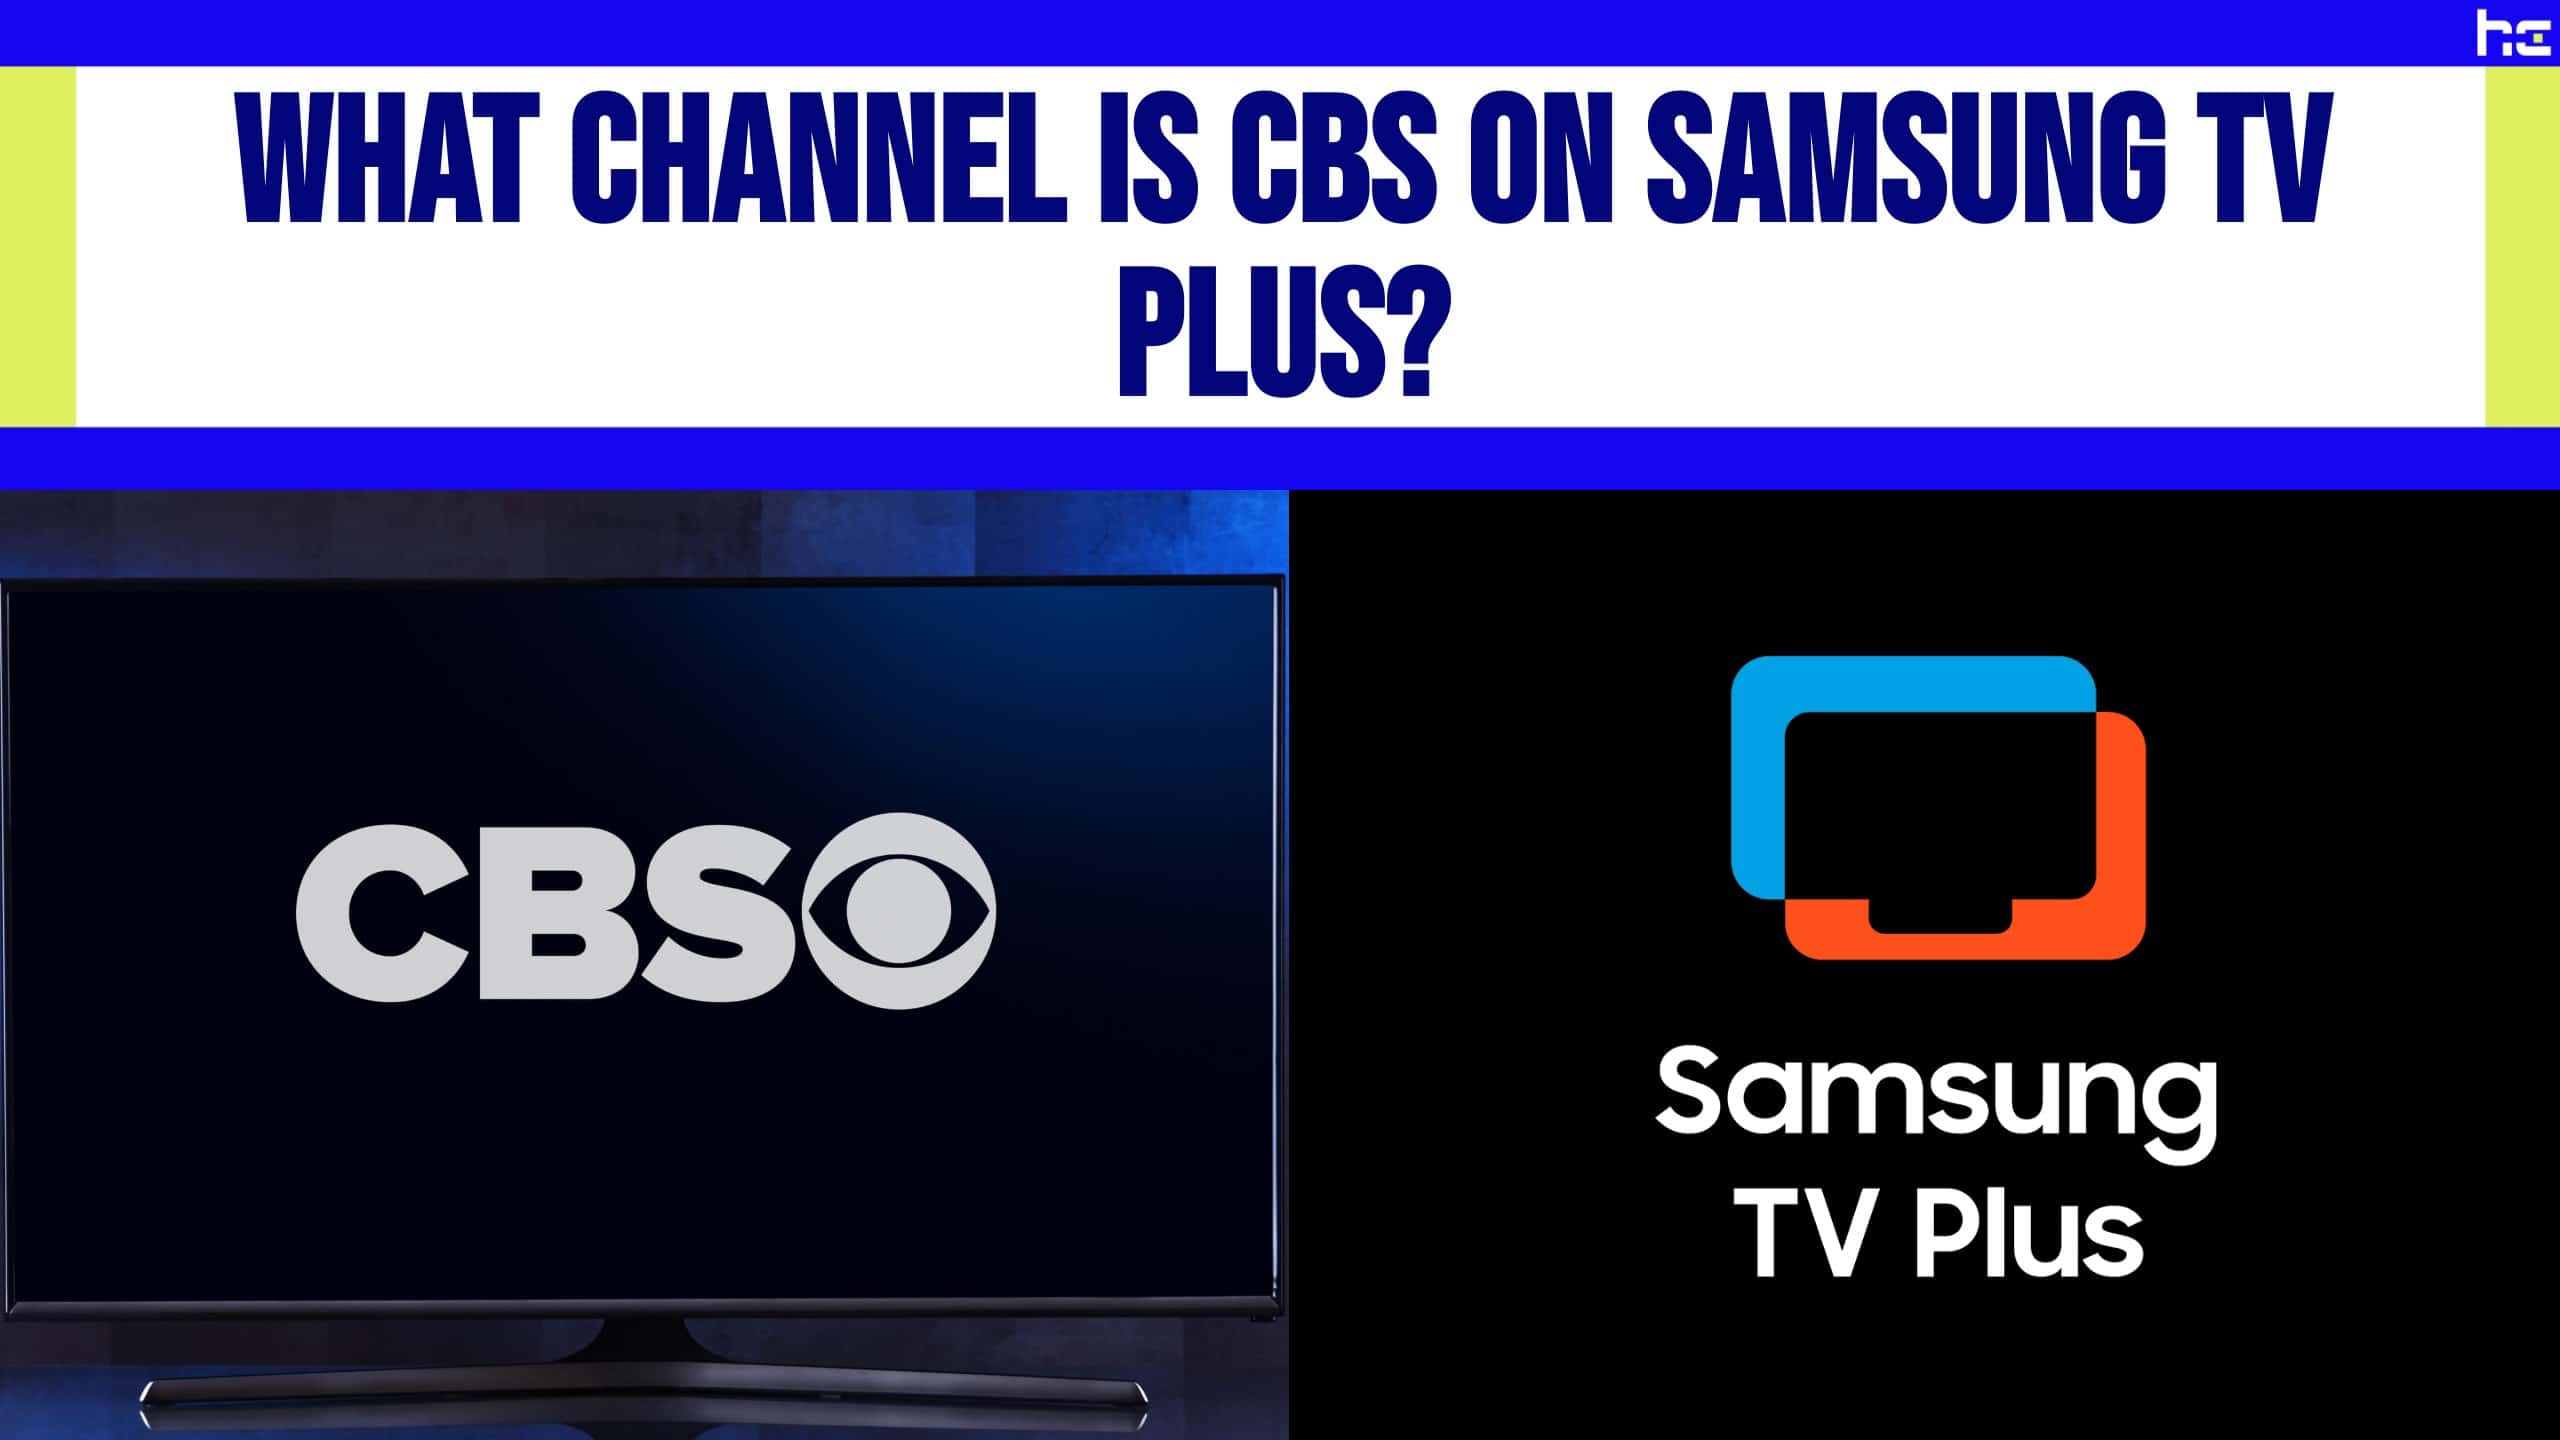 Smart TV - Samsung TV Plus